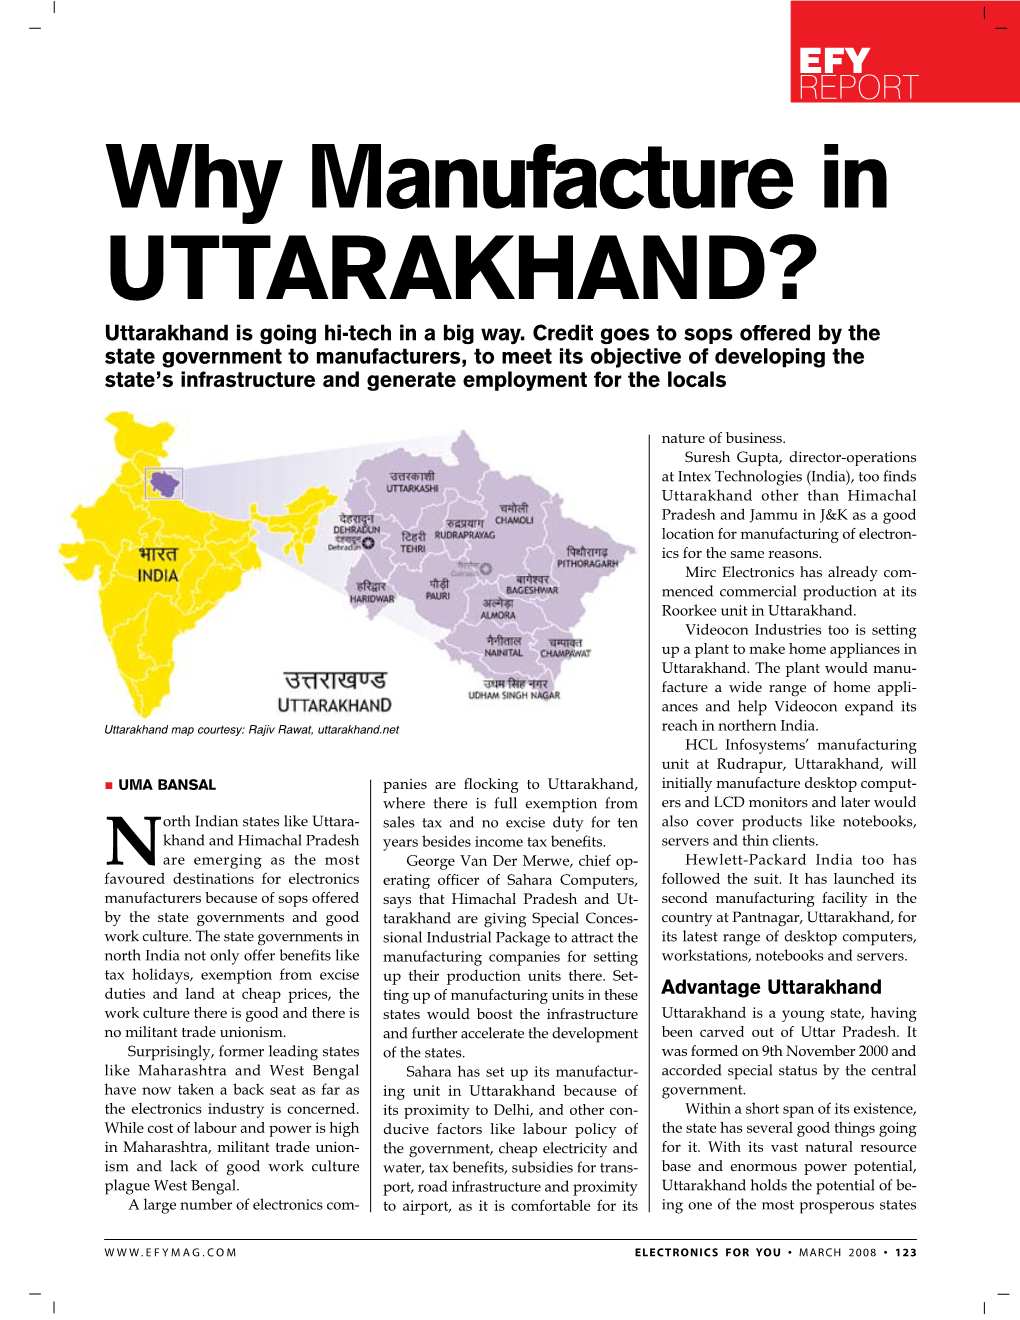 Why Manufacture in Uttarakhand? Uttarakhand Is Going Hi-Tech in a Big Way